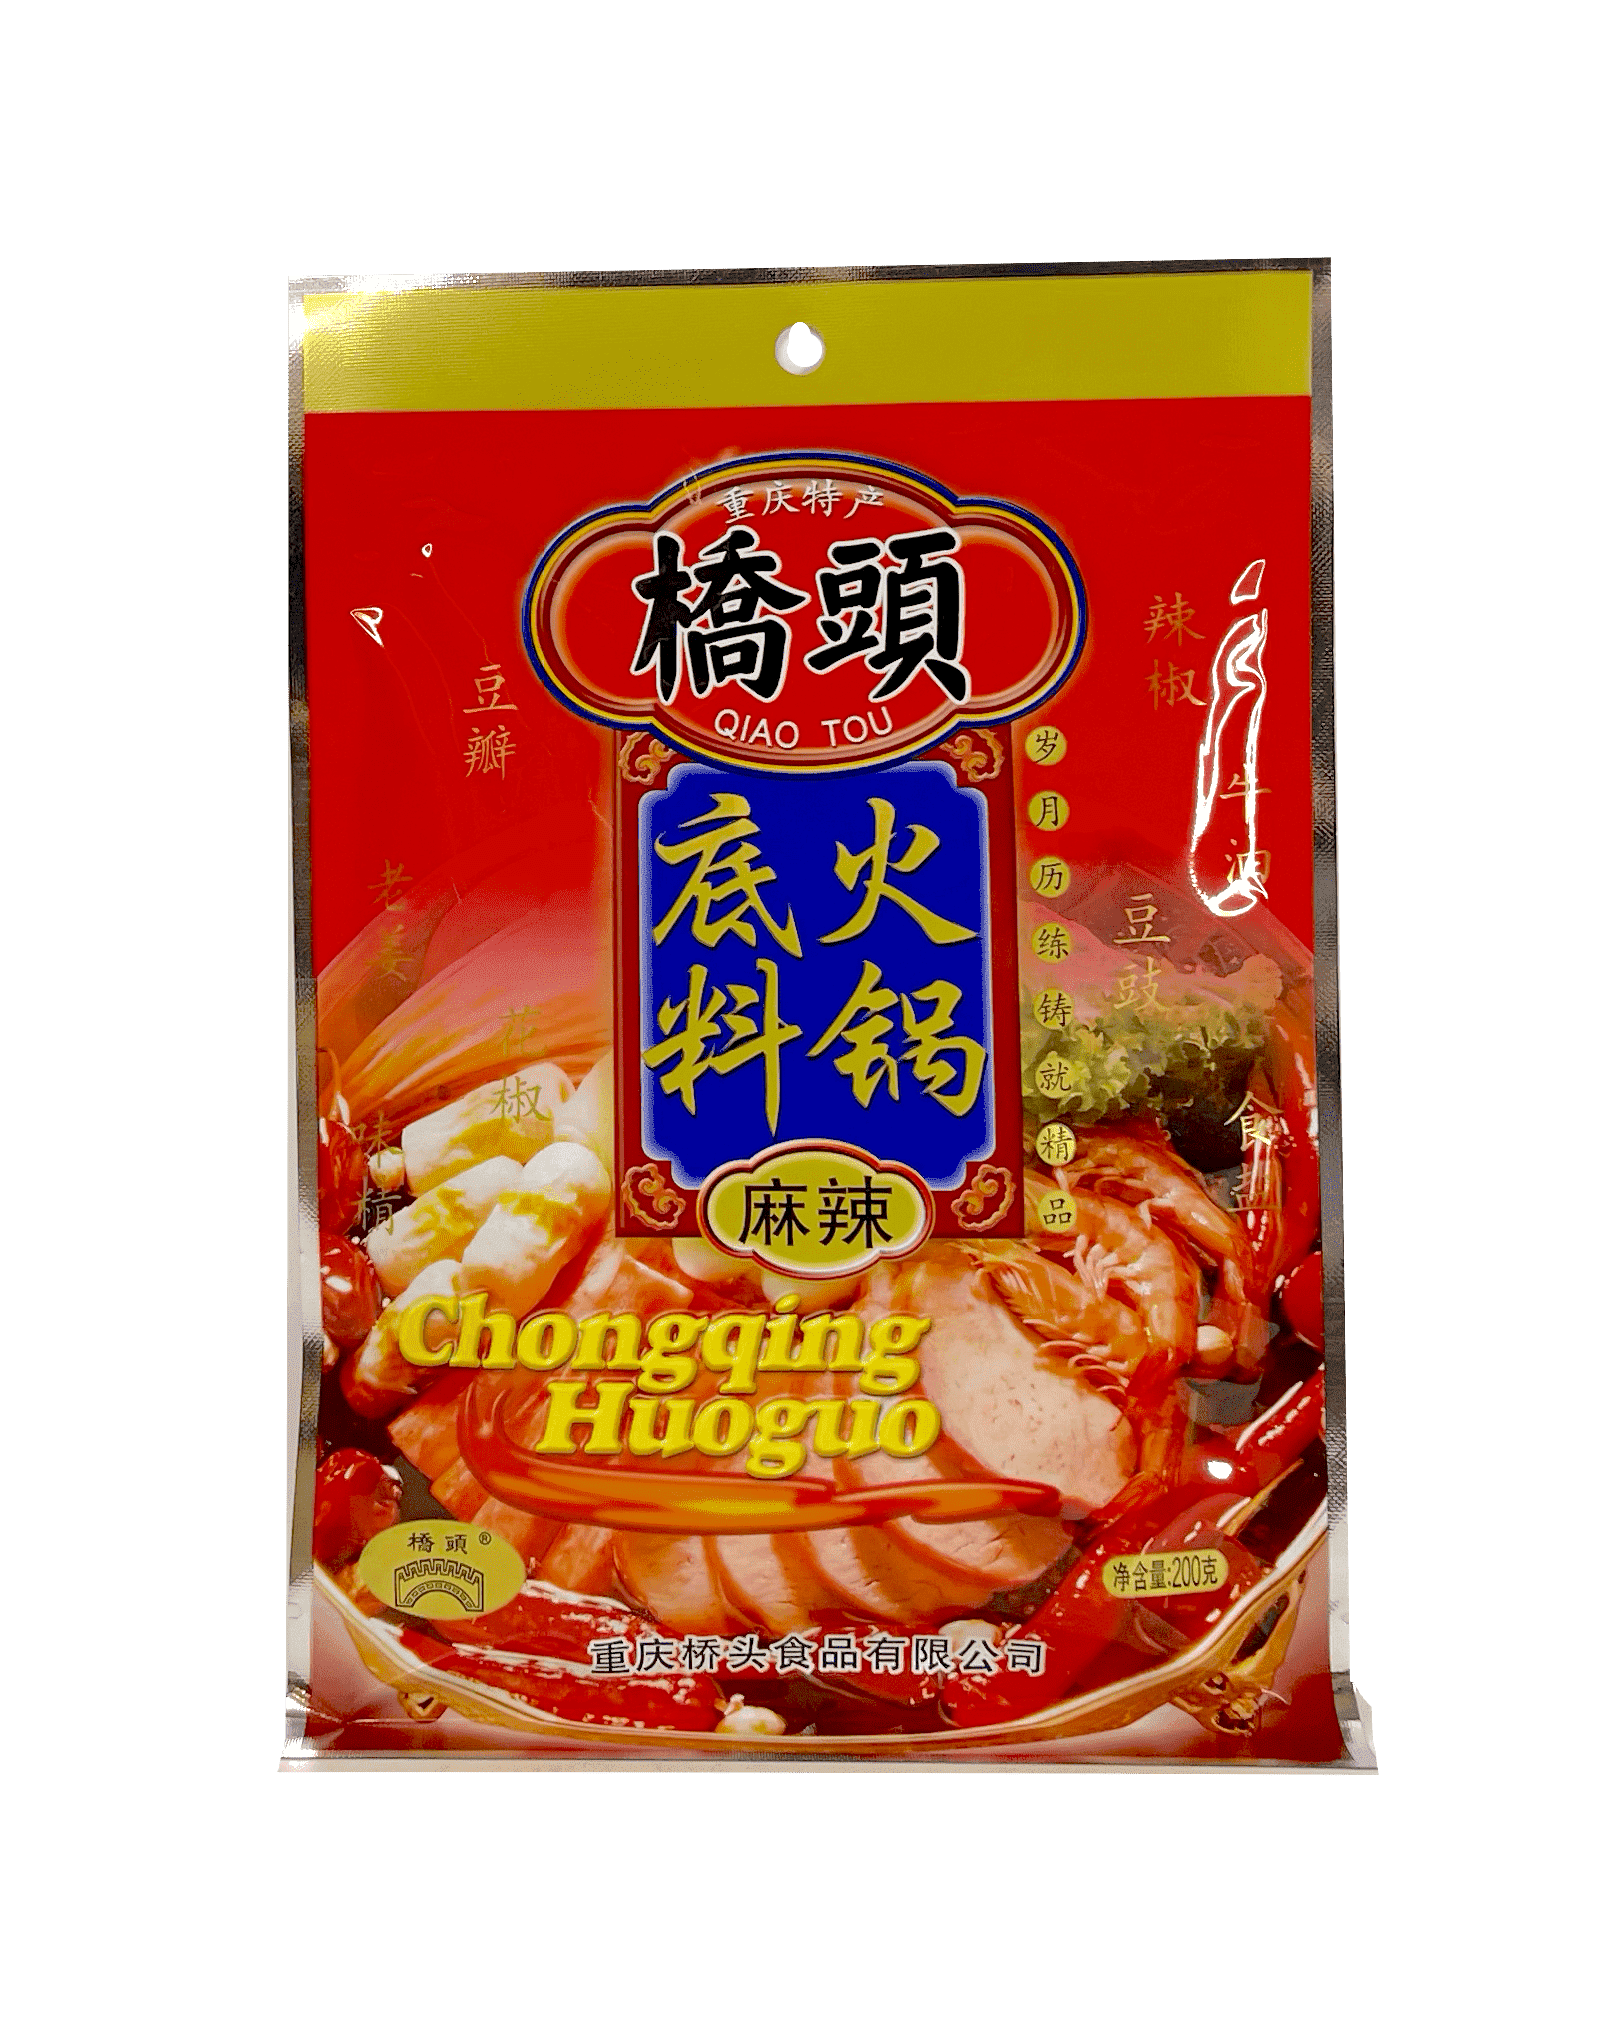 Hotpot Spice Hot / Spicy 200g Chongqing MLHGDL Qiao Tou China